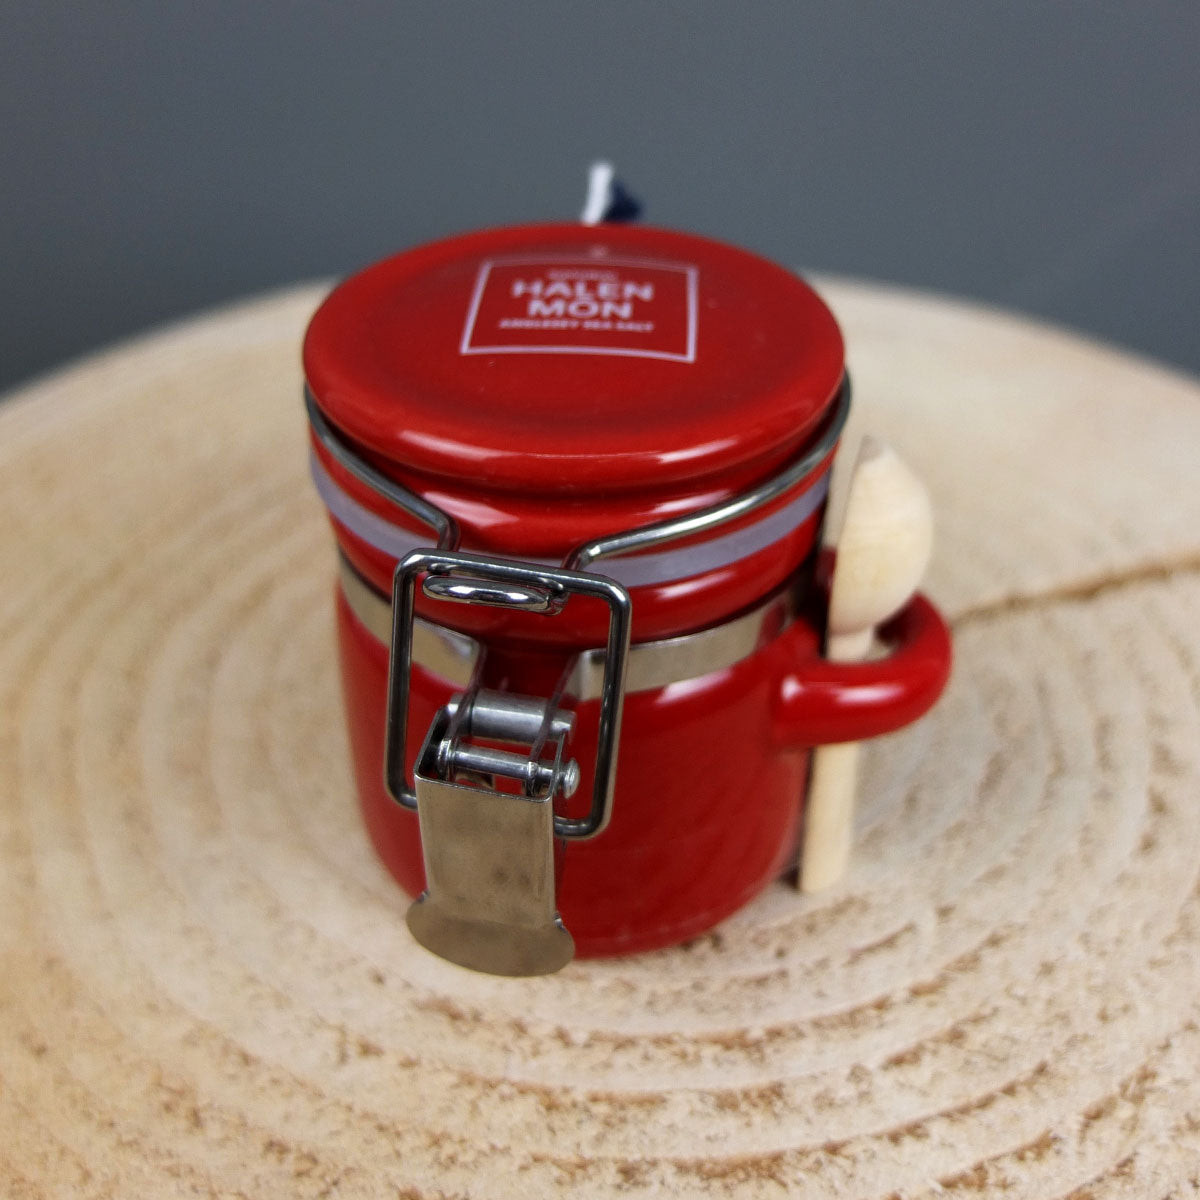 Red Ceramic Jar with Chilli and Garlic Sea Salt by Halen Mon